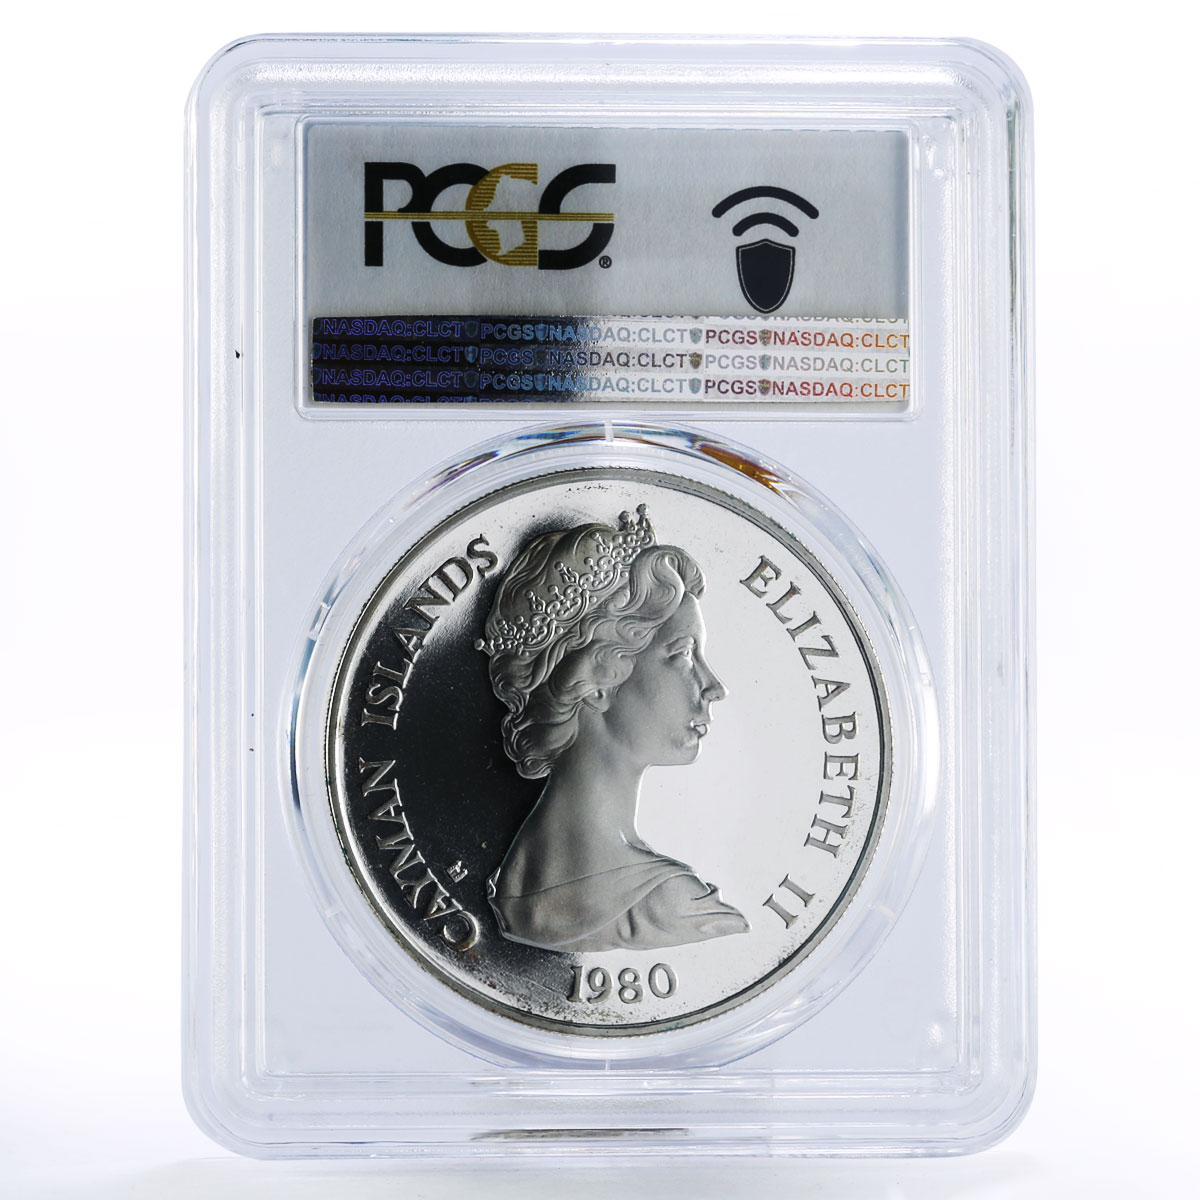 Cayman Islands 25 dollars Saxon Kings Harold Edward PR66 PCGS silver coin 1980